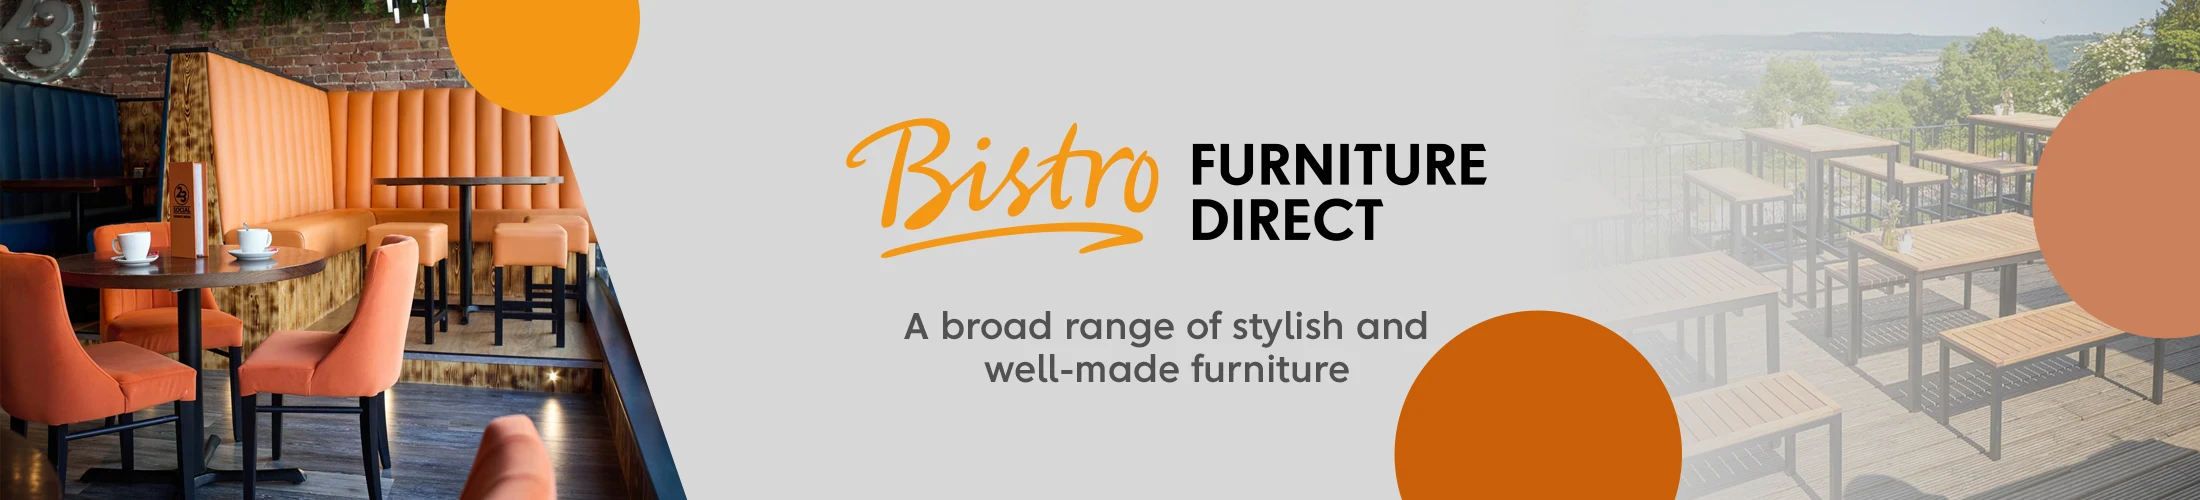 Bistro Furniture Direct